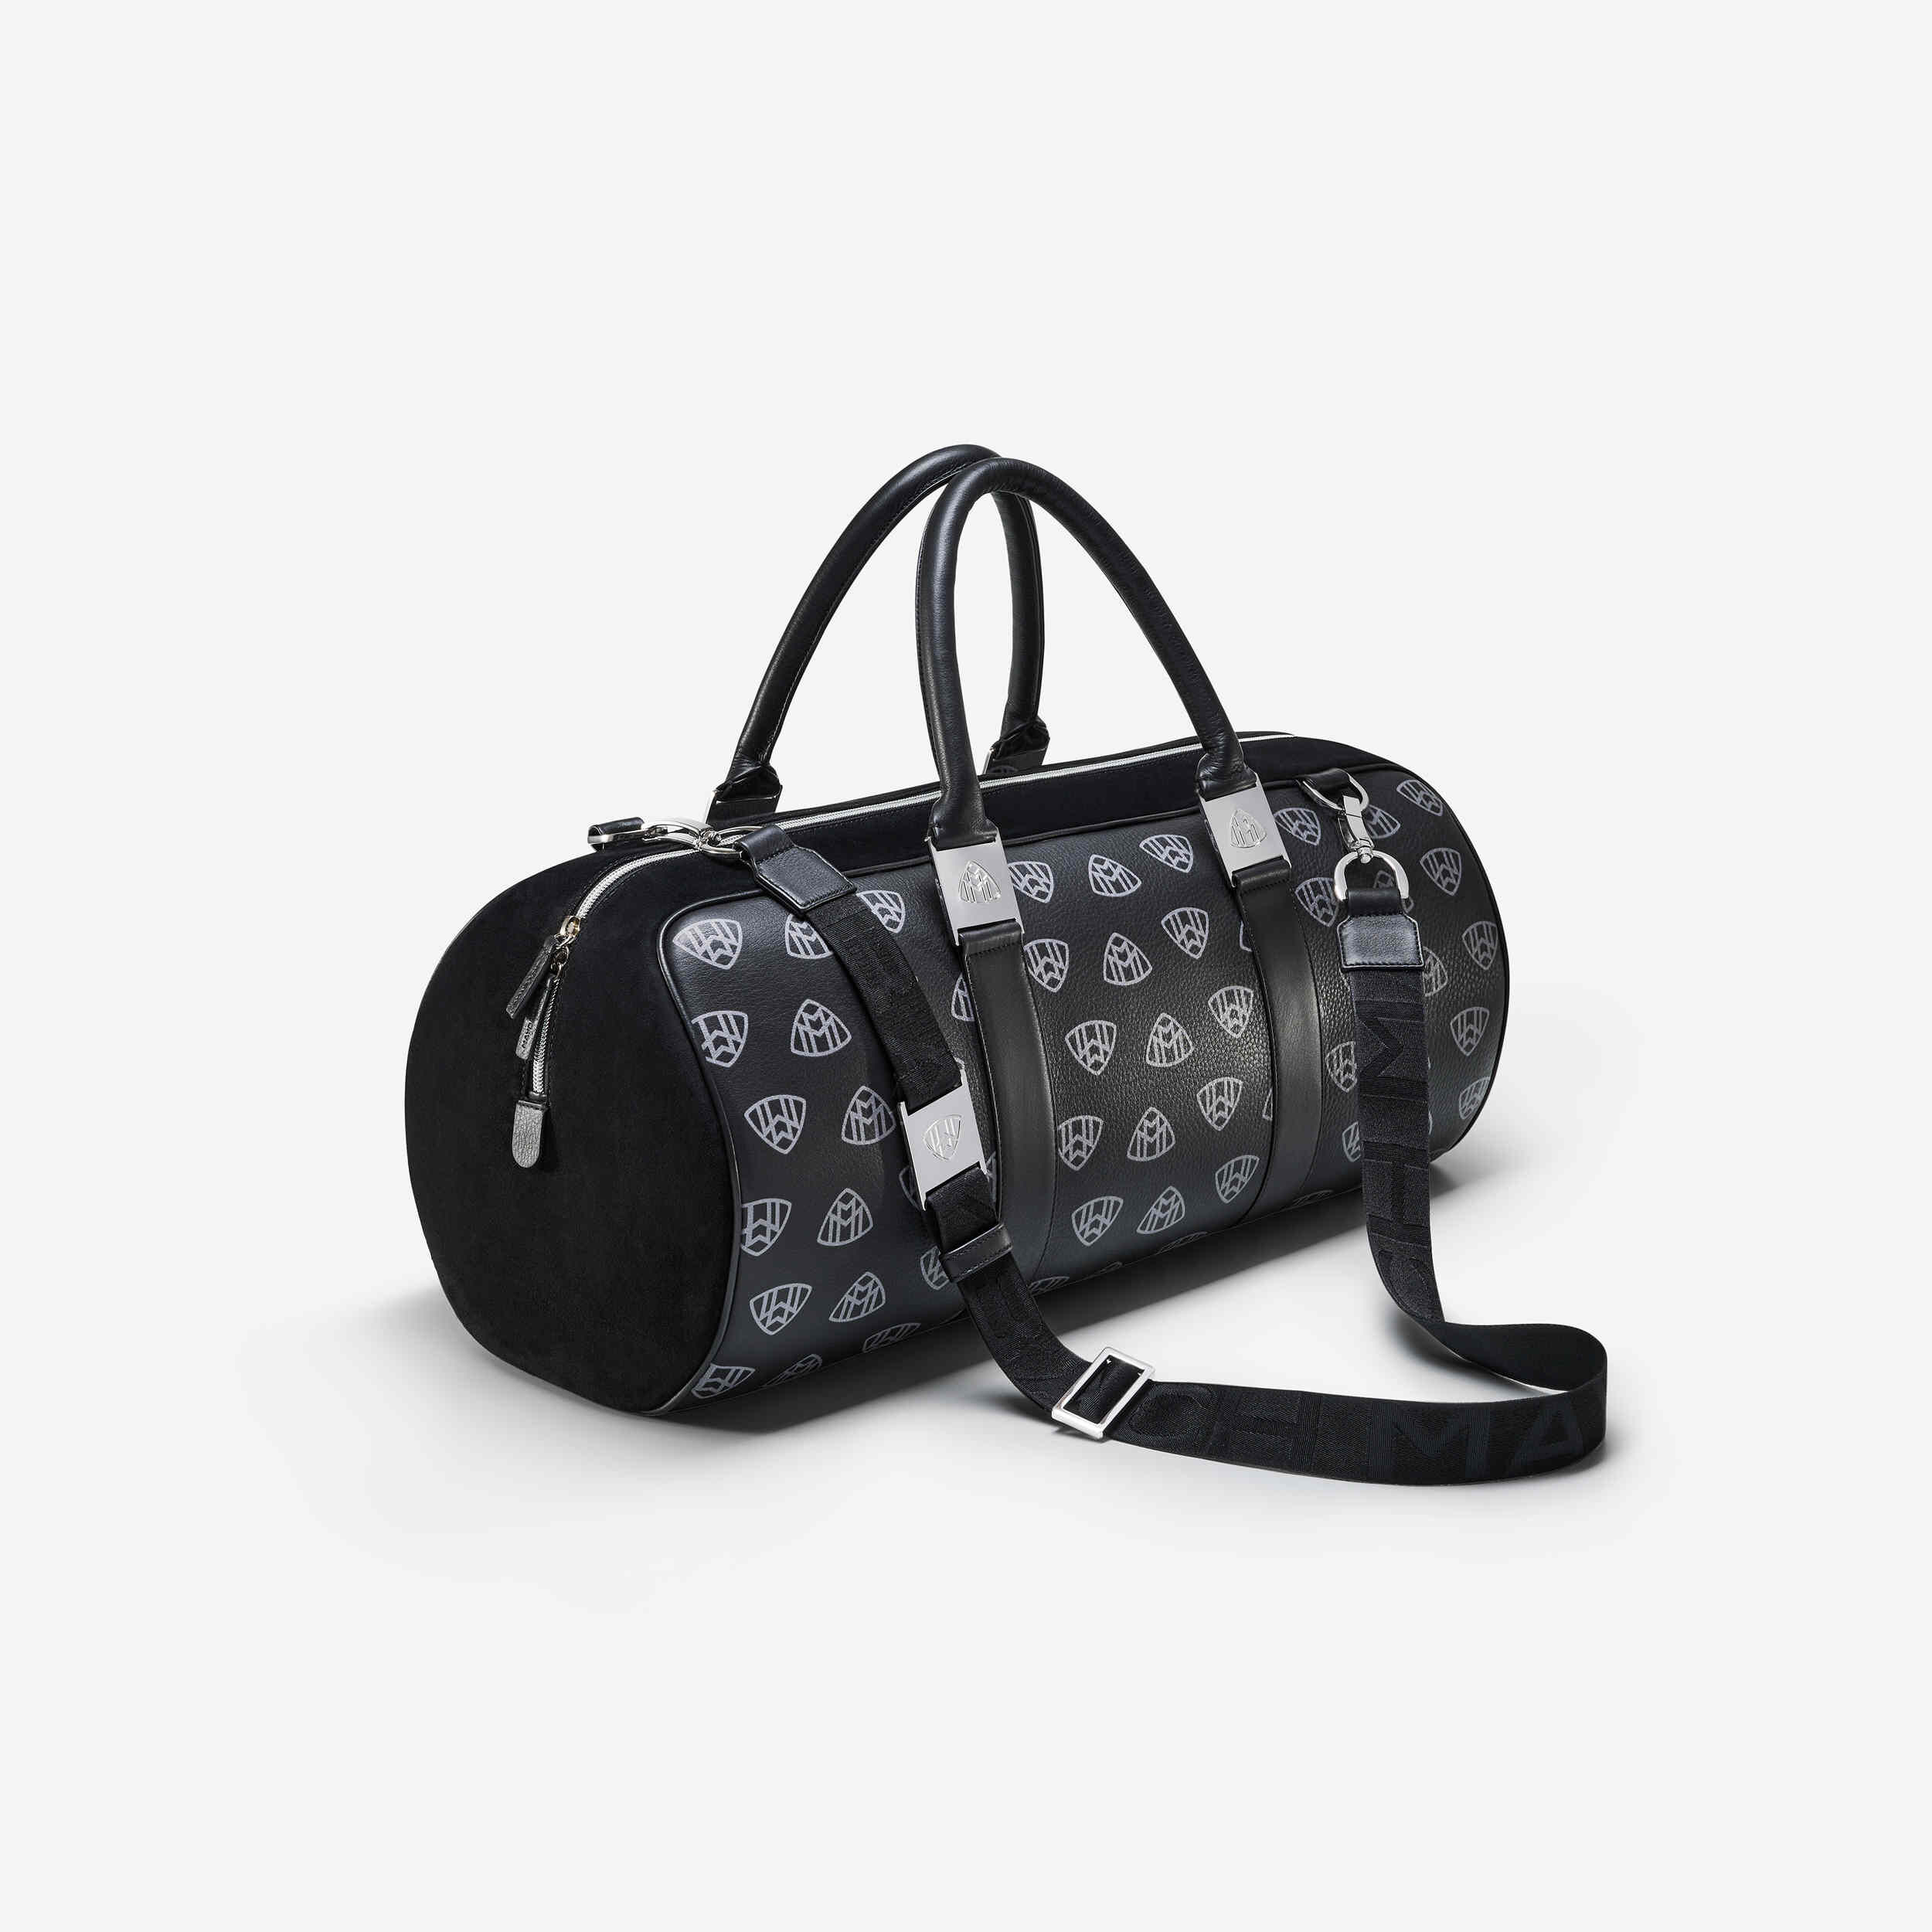 Louis Vuitton Duffle Bag Dubai Mall Collection Price :-5380 in